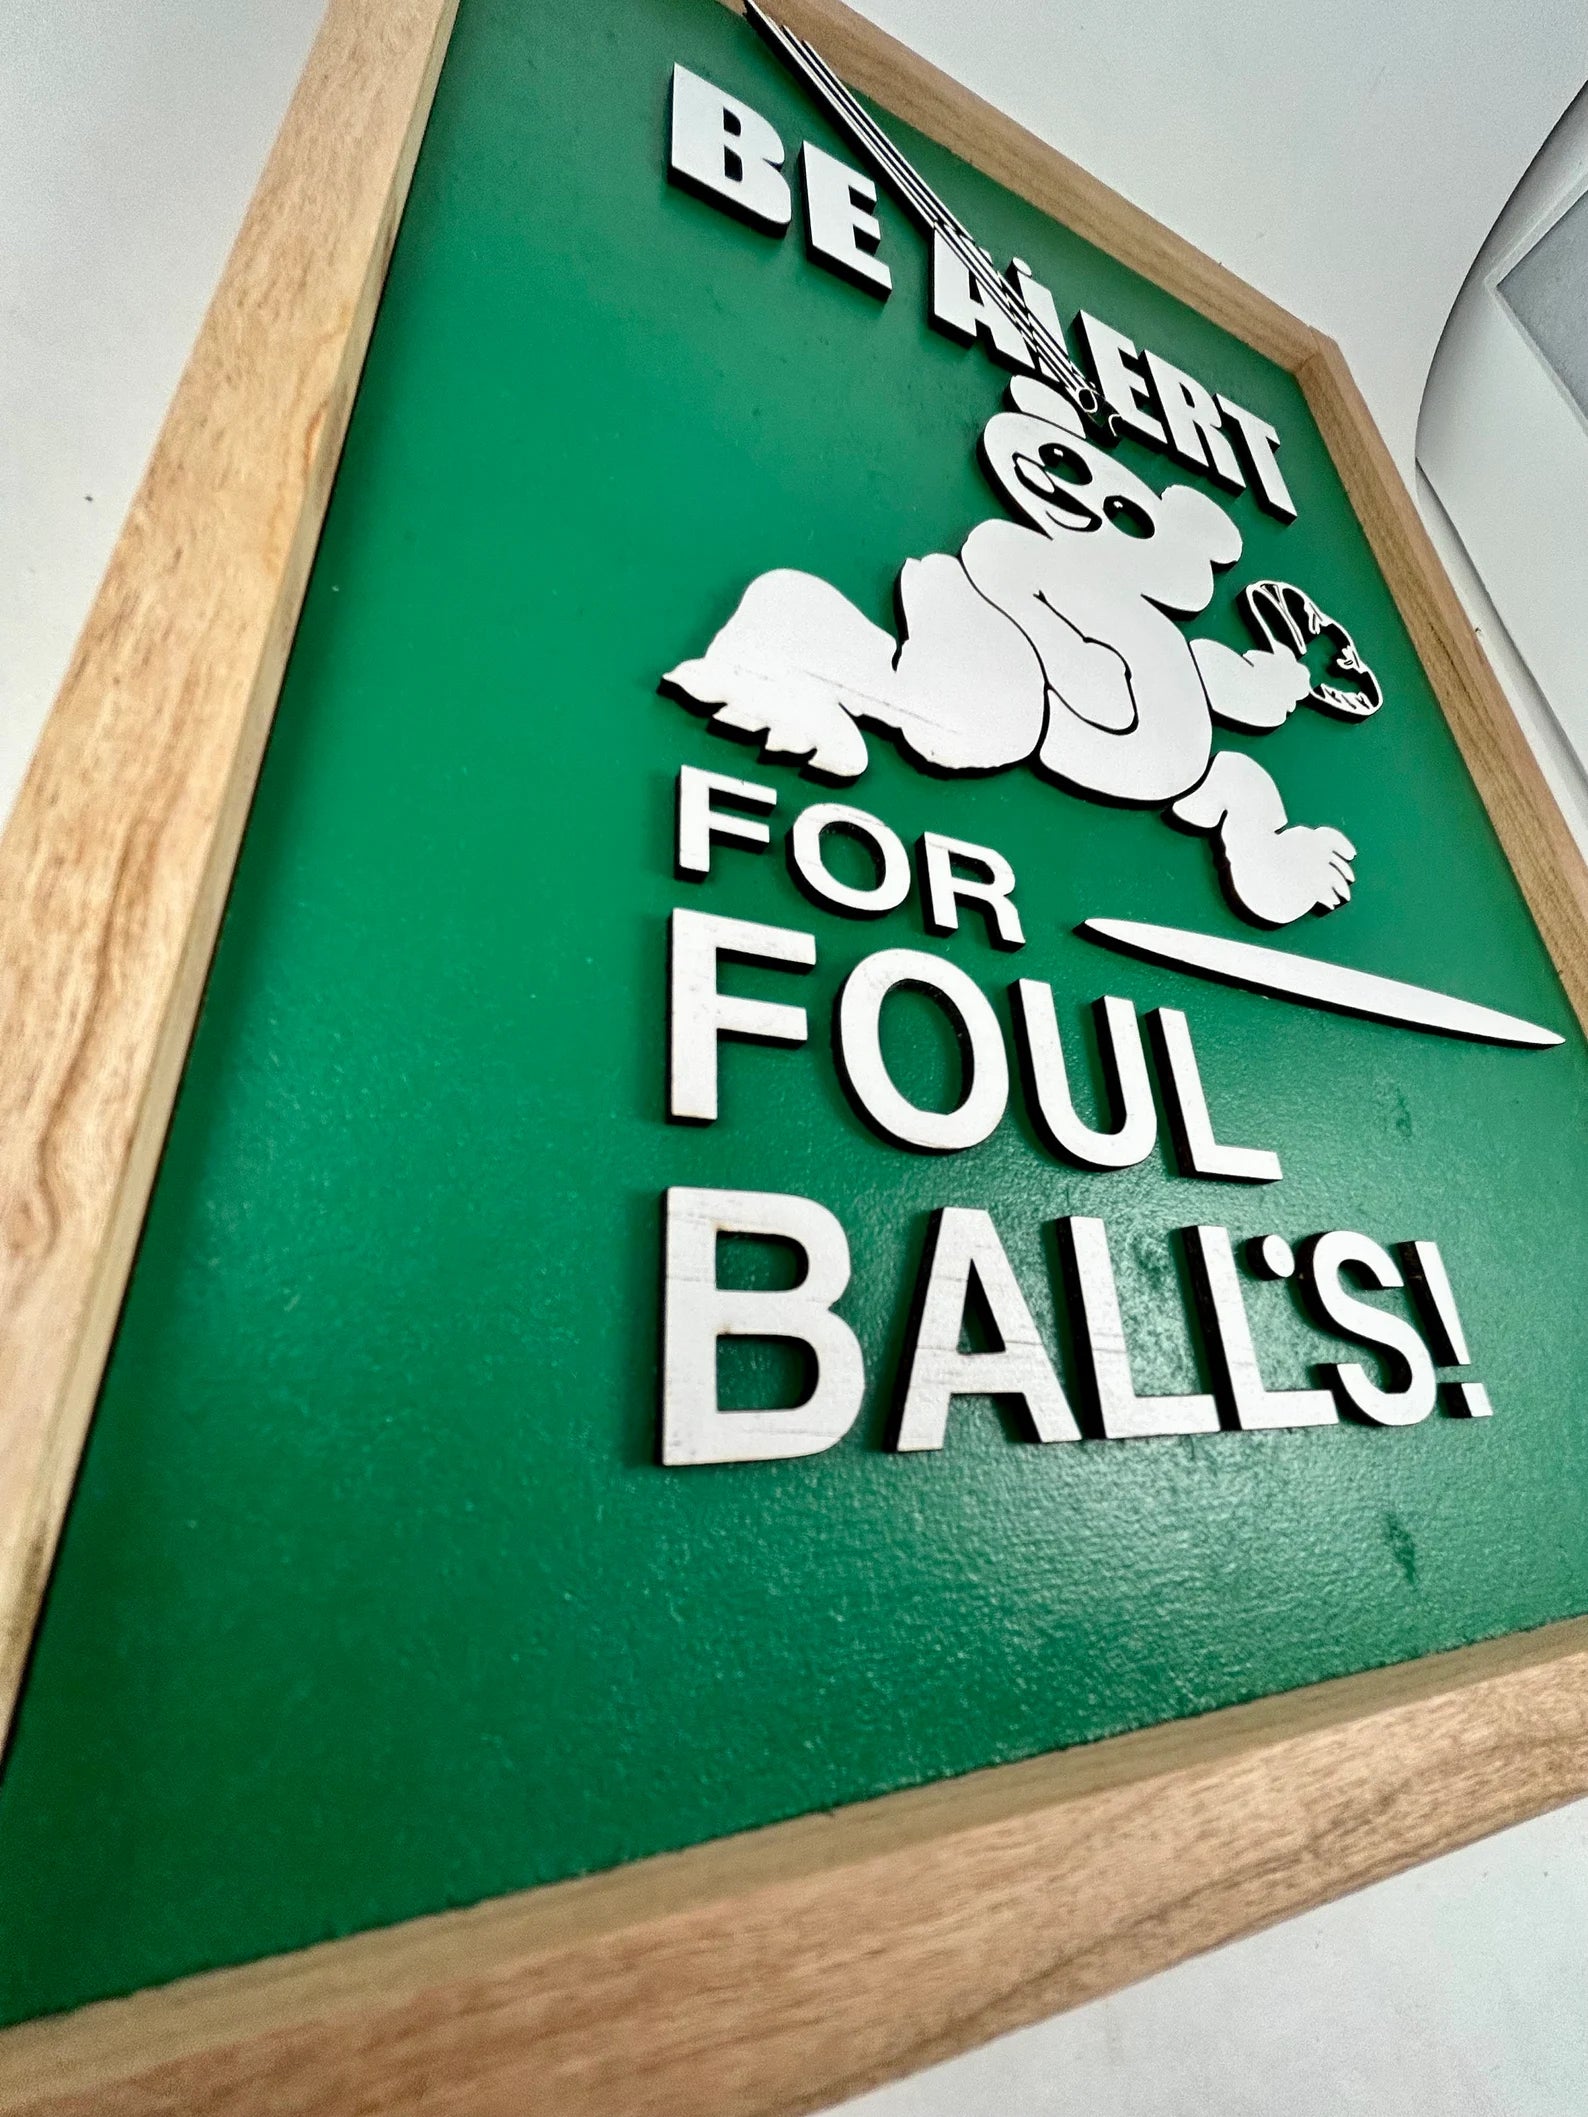 Chicago Cubs 'Be Alert for Foul Balls' - Wood Sign